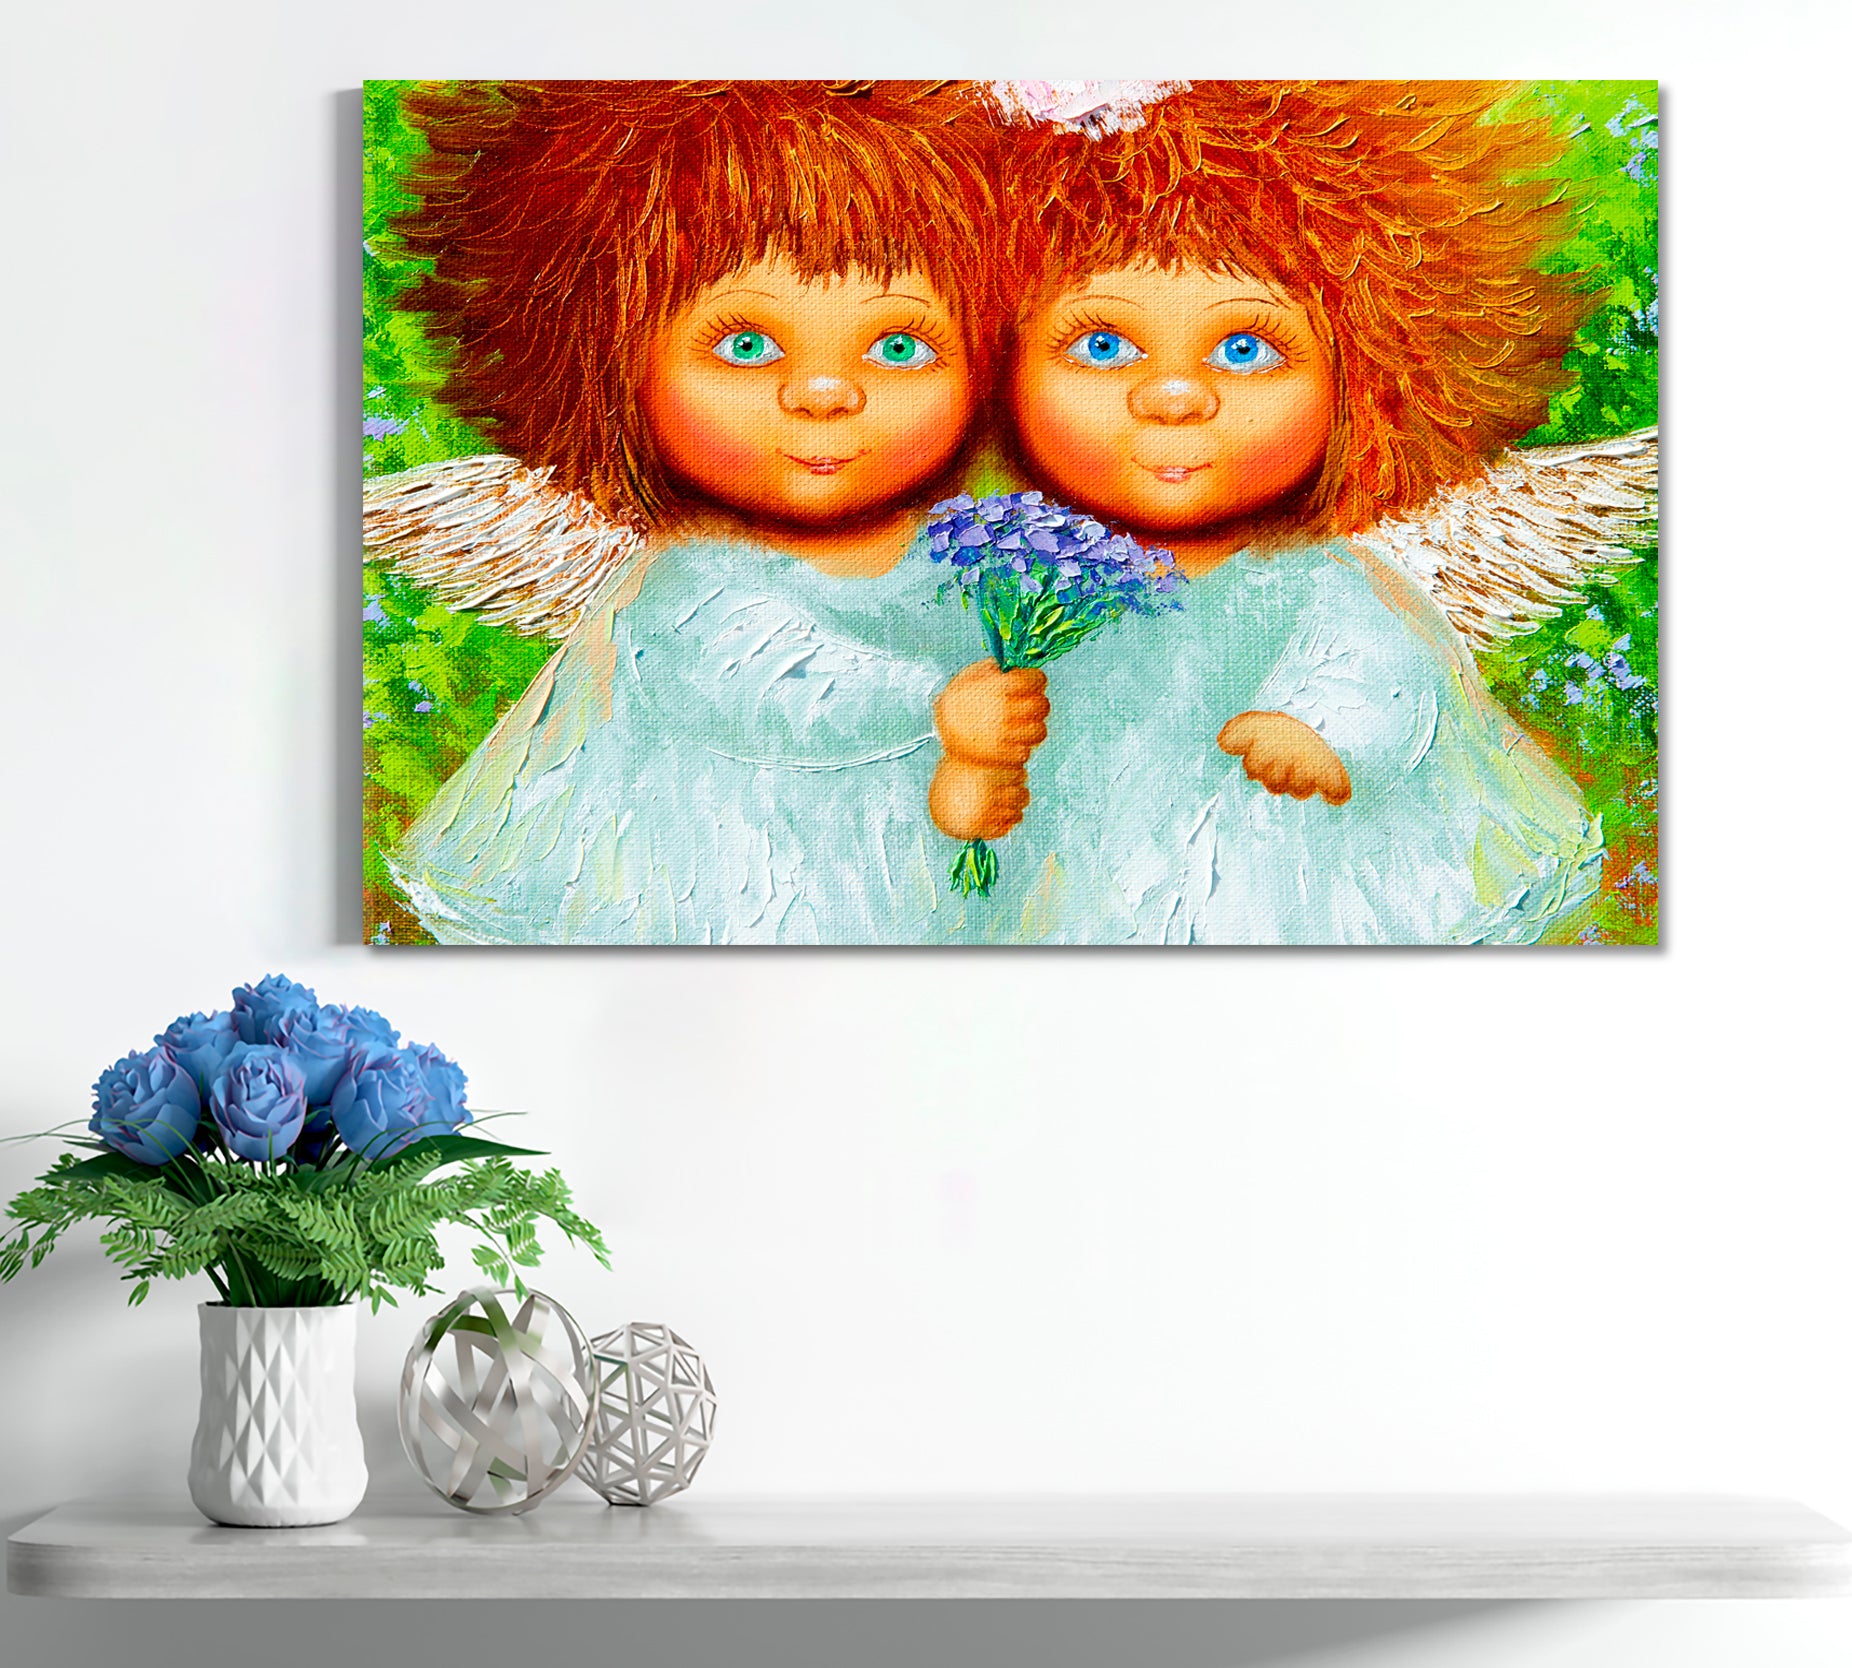 KID'S ART Two Cute Little Girls Shaggy Red Hair Kids Room Canvas Art Print Artesty 1 panel 24" x 16" 